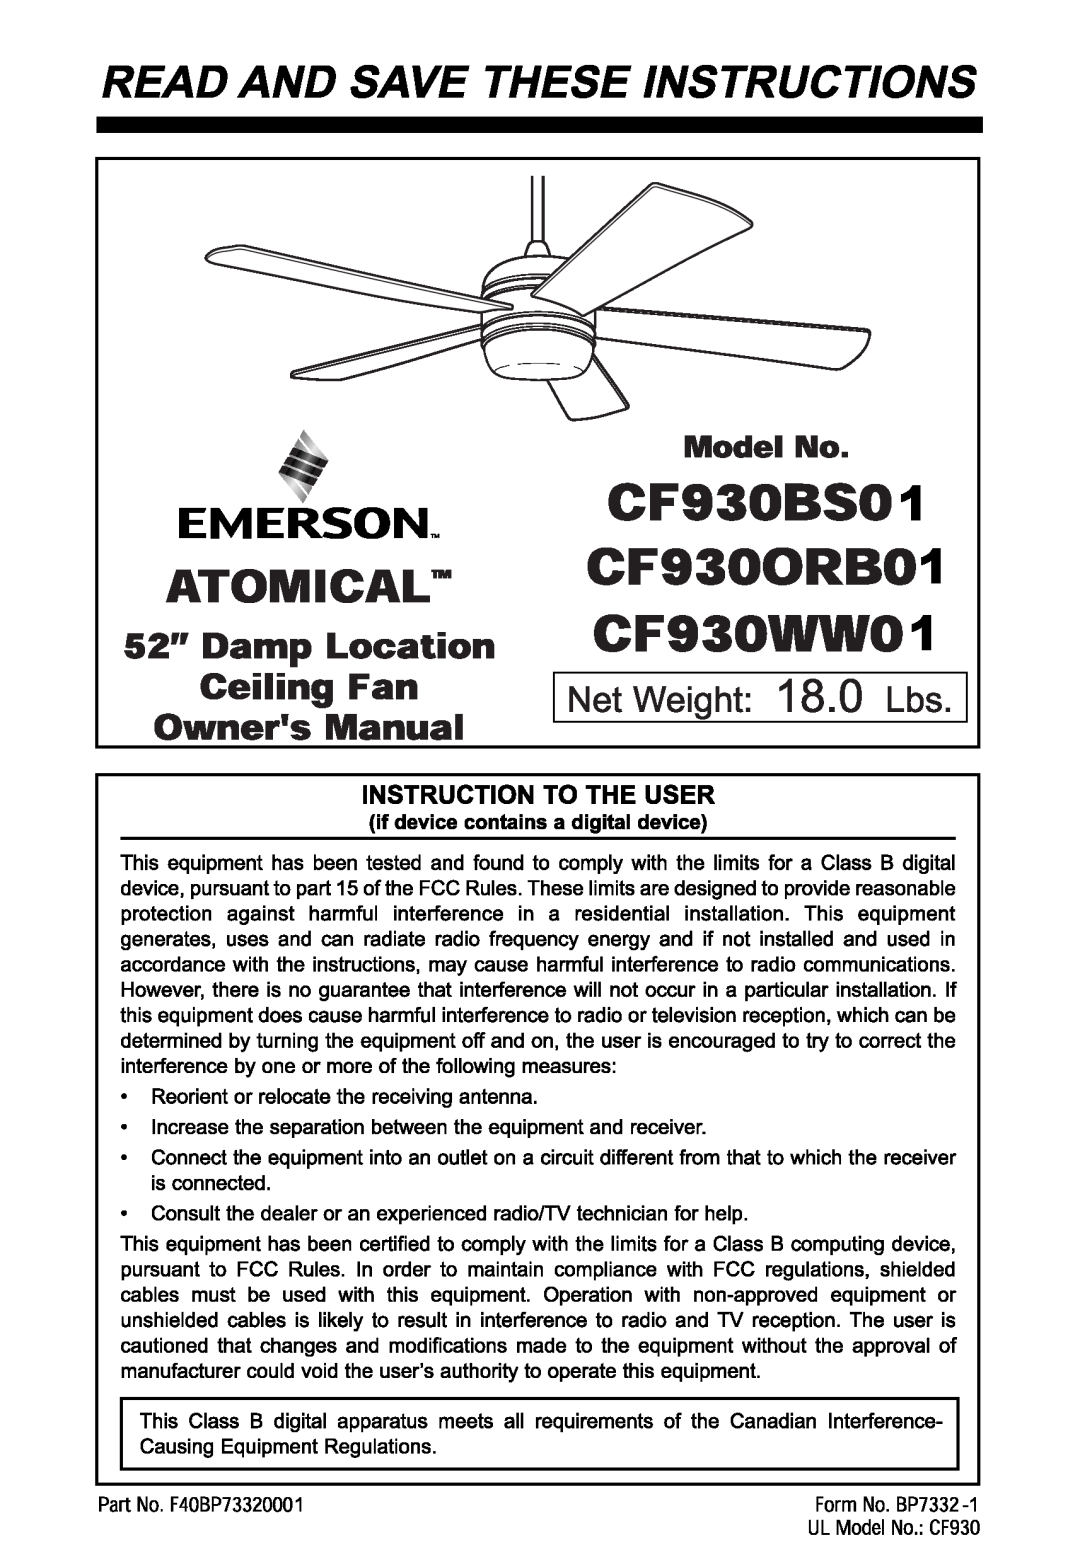 Emerson CF930BS01, CF930ORB01, CF930WW01 manual 